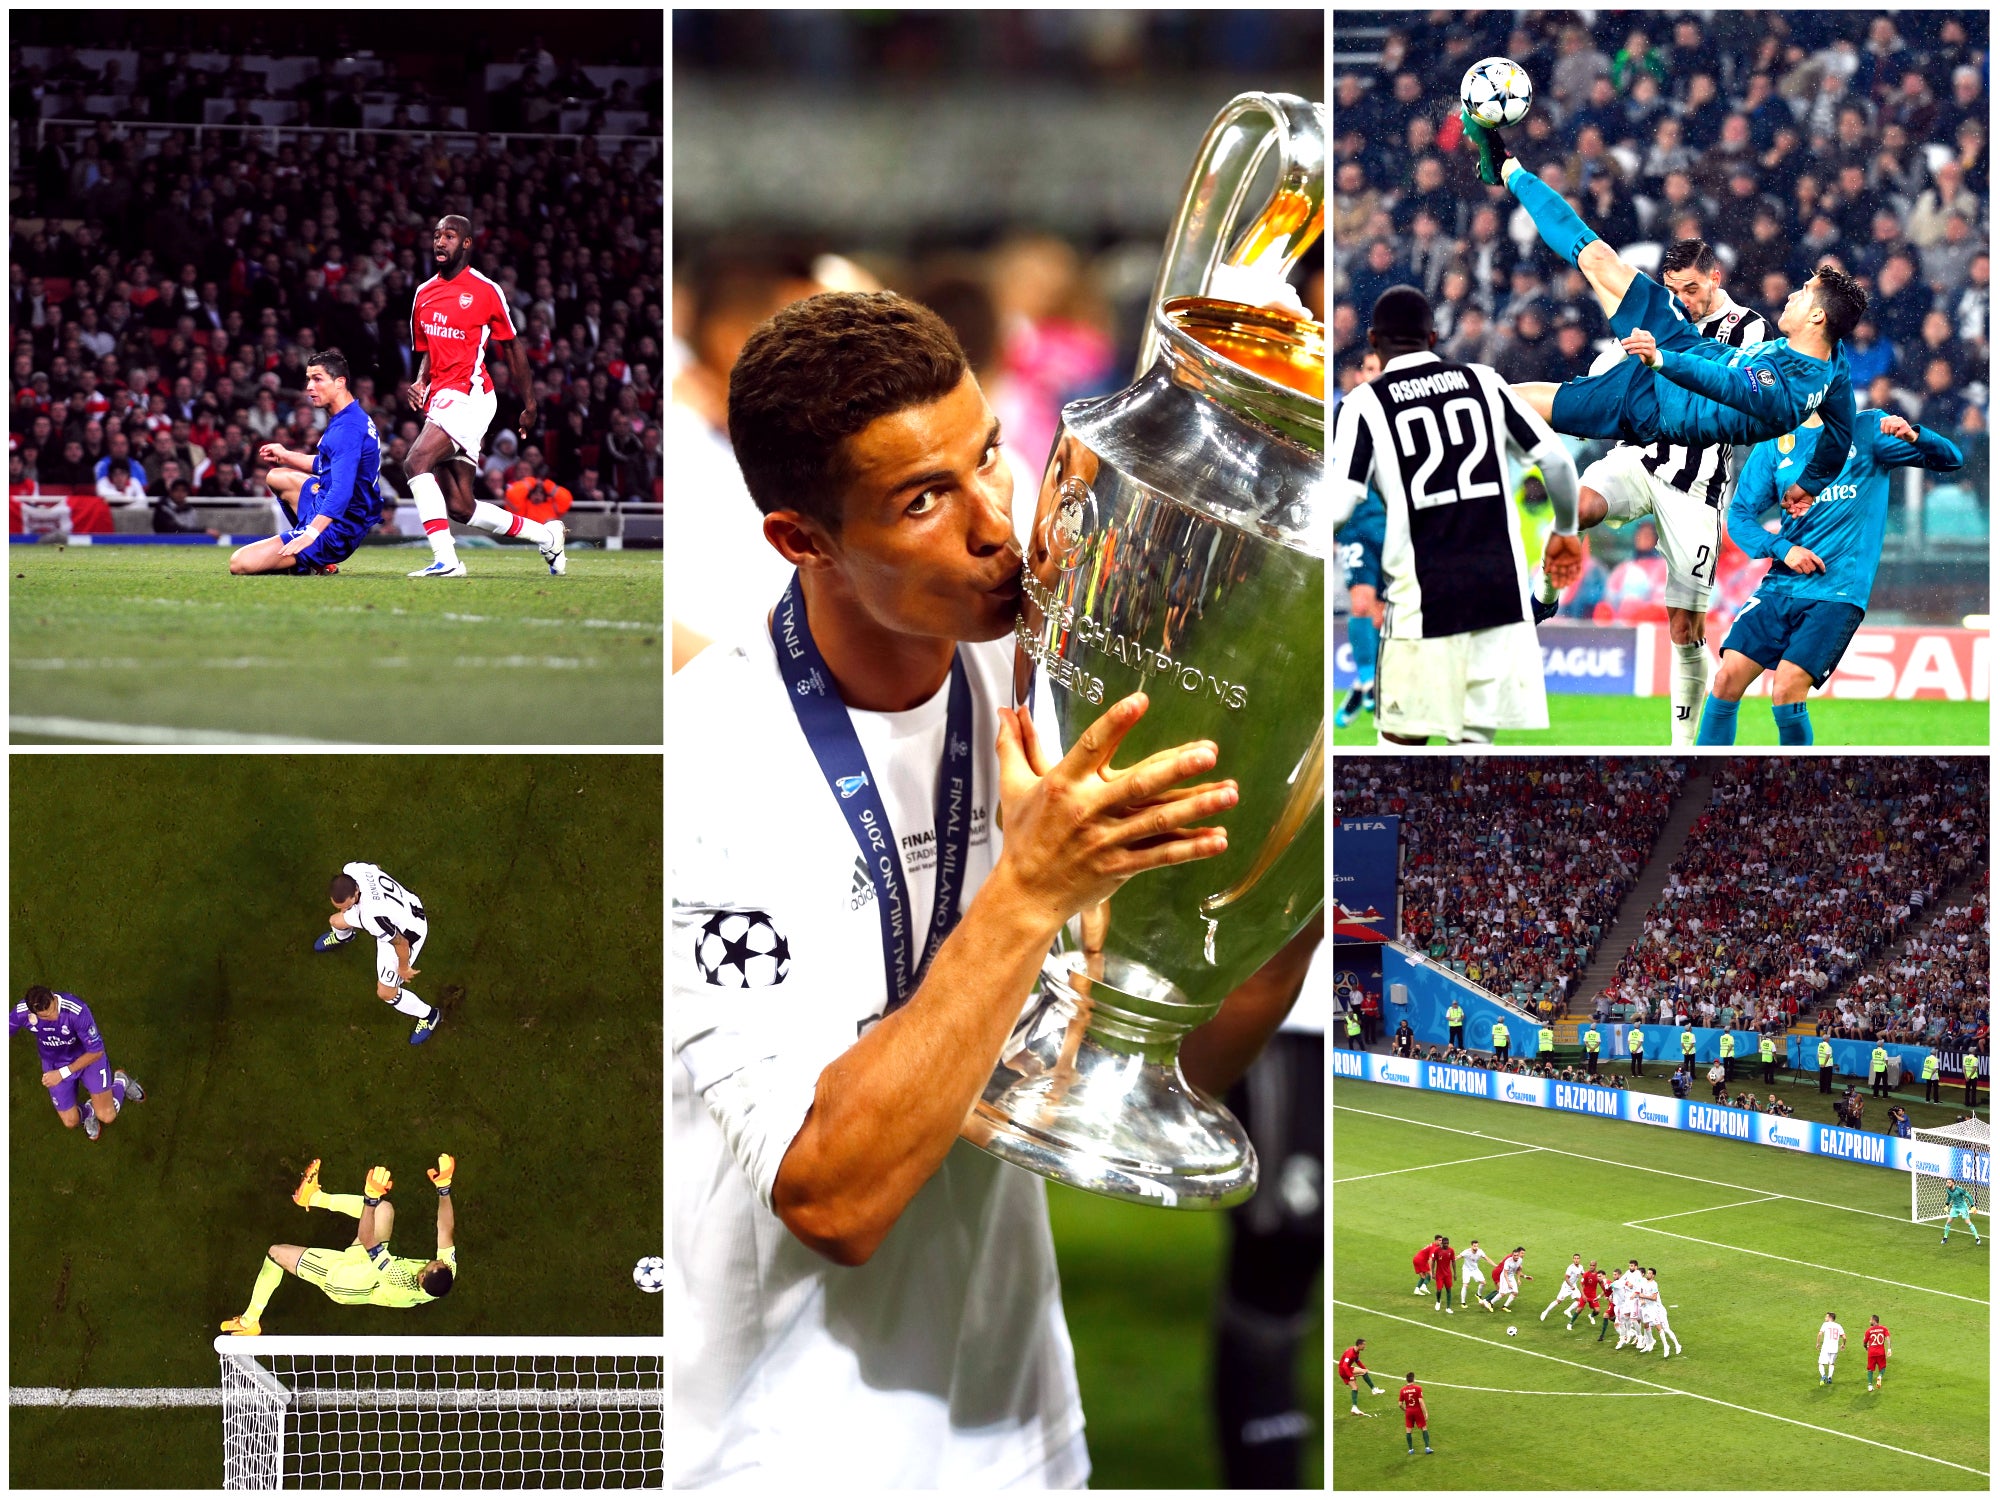 Some of Cristiano Ronaldo's golden moments